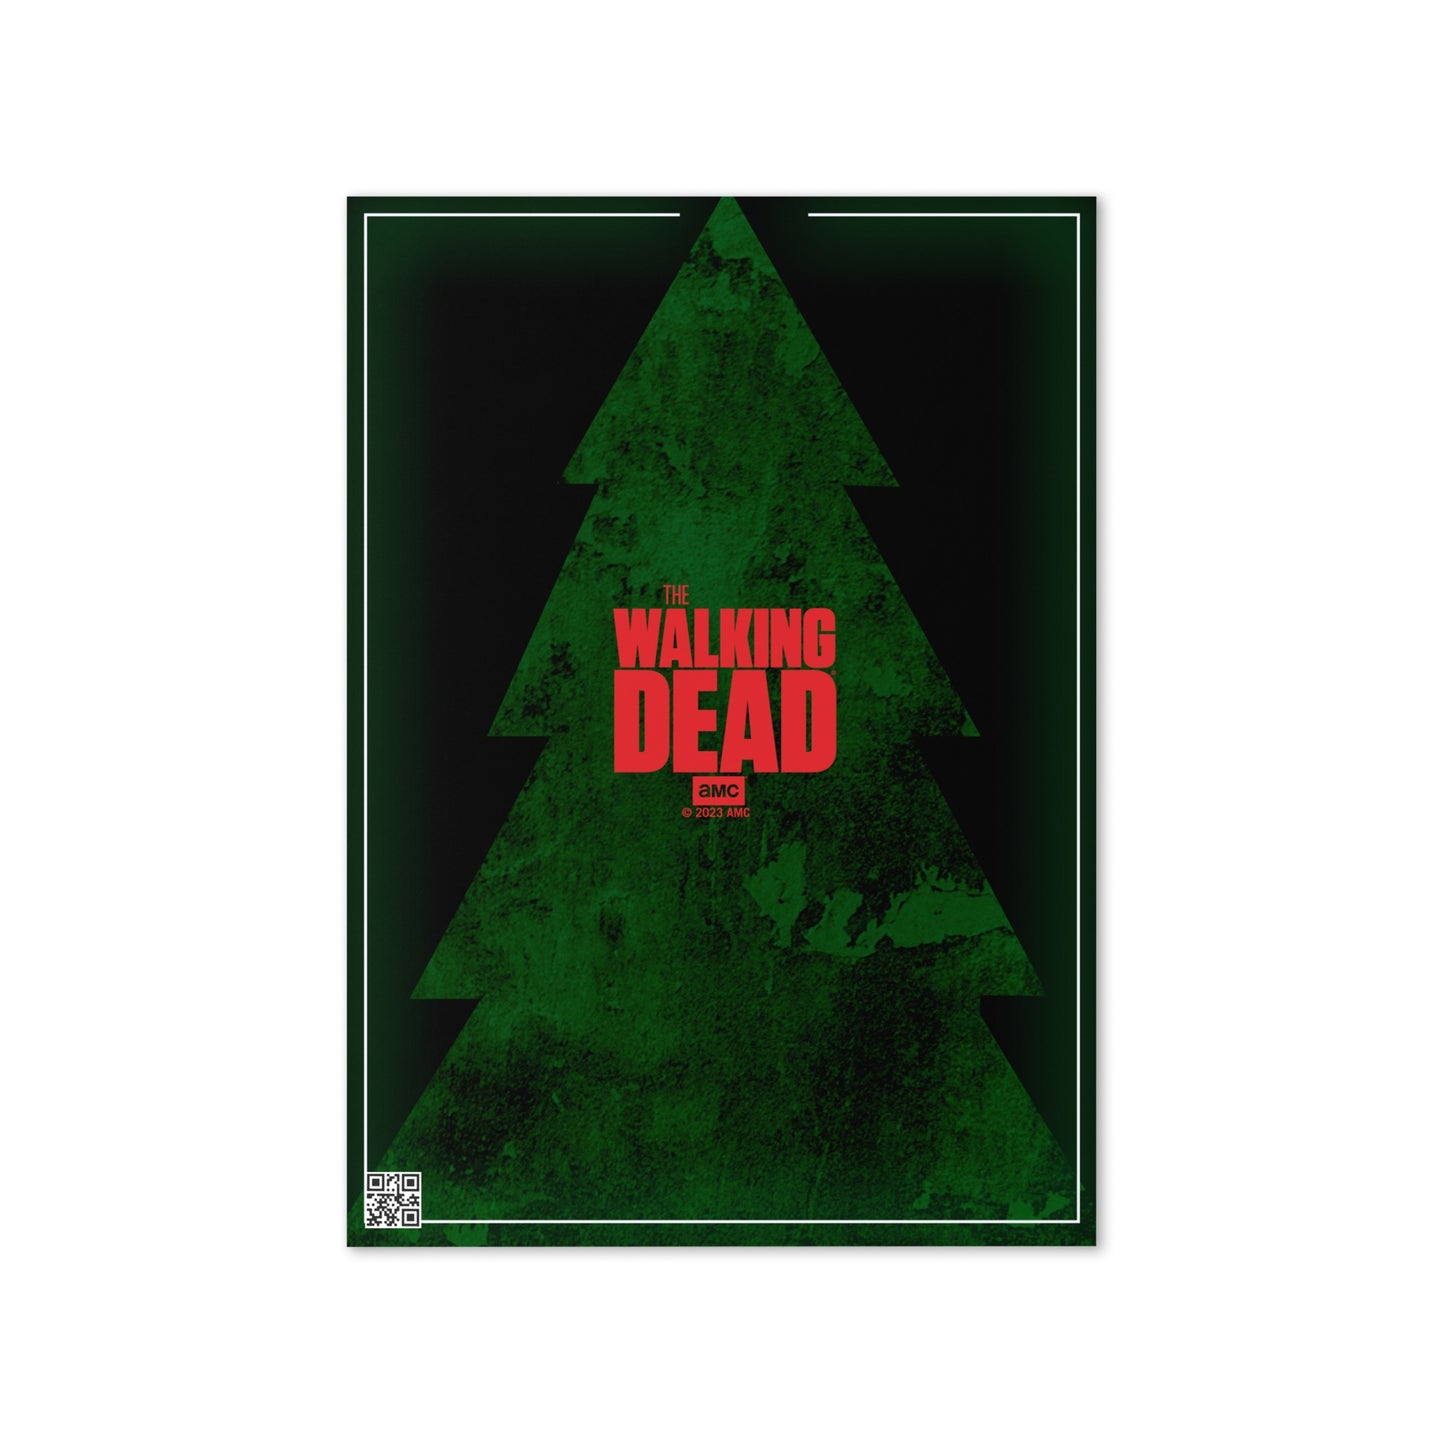 The Walking Dead Daryl Dixmas Greeting Card